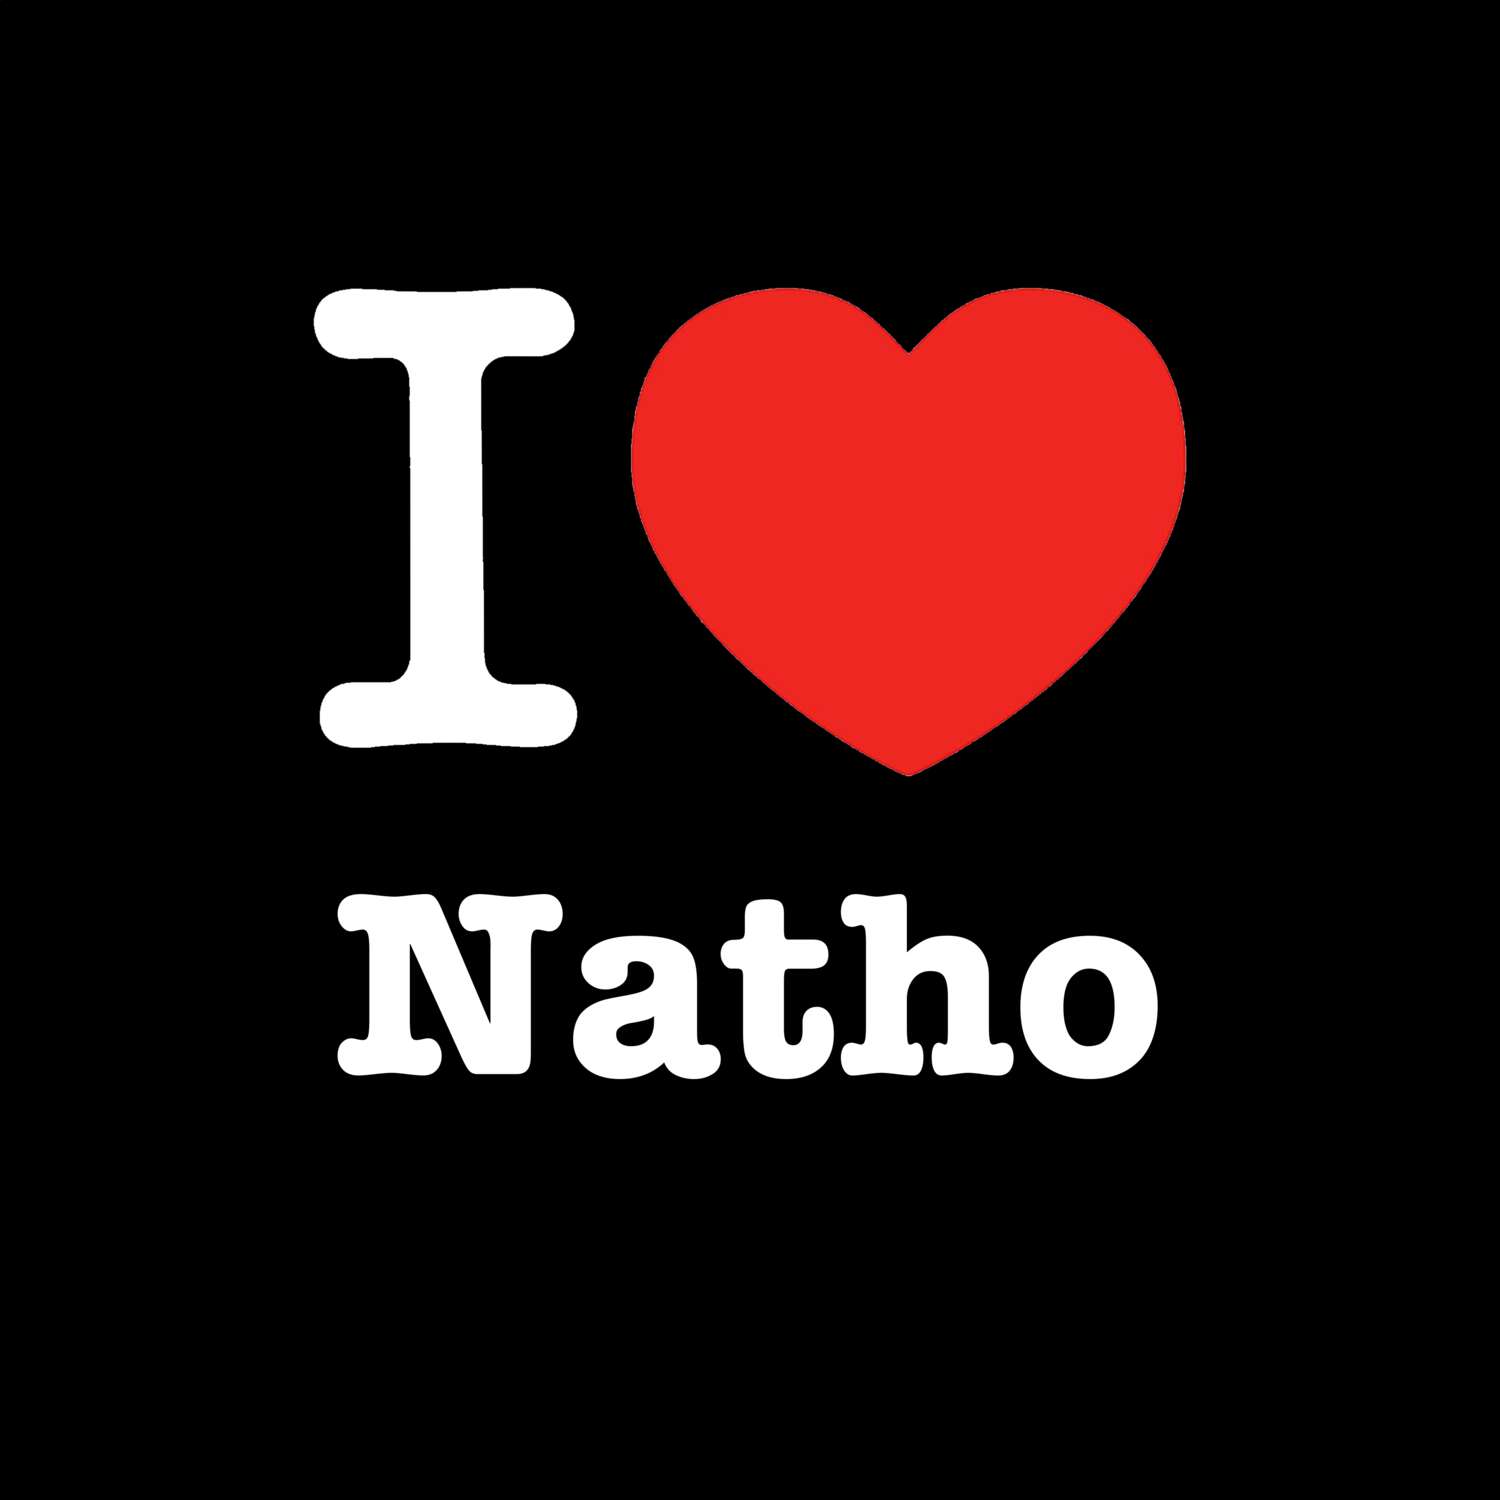 Natho T-Shirt »I love«